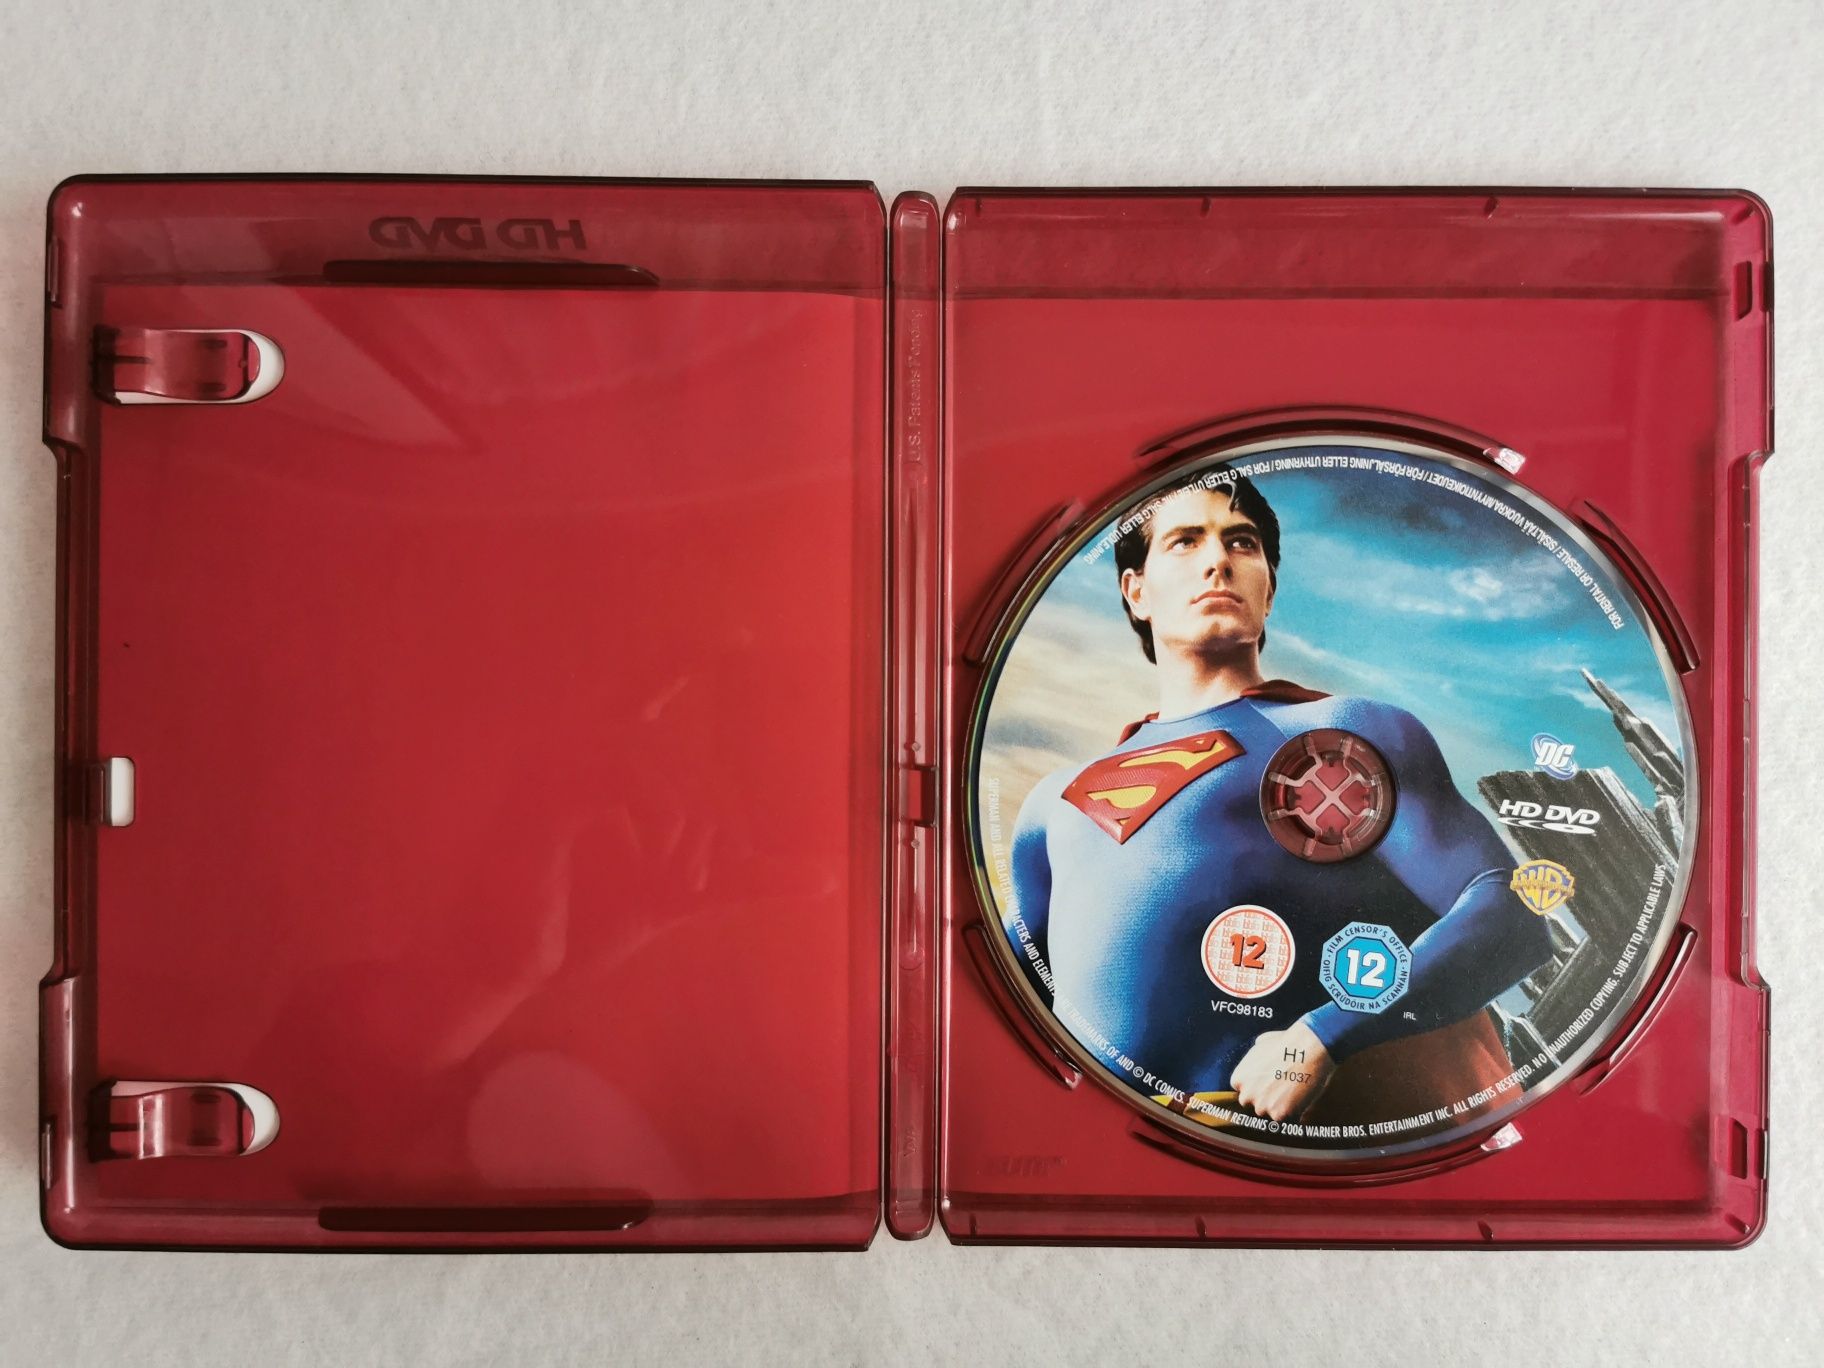 Superman Returns (Superman Powrót) HD-DVD (En)